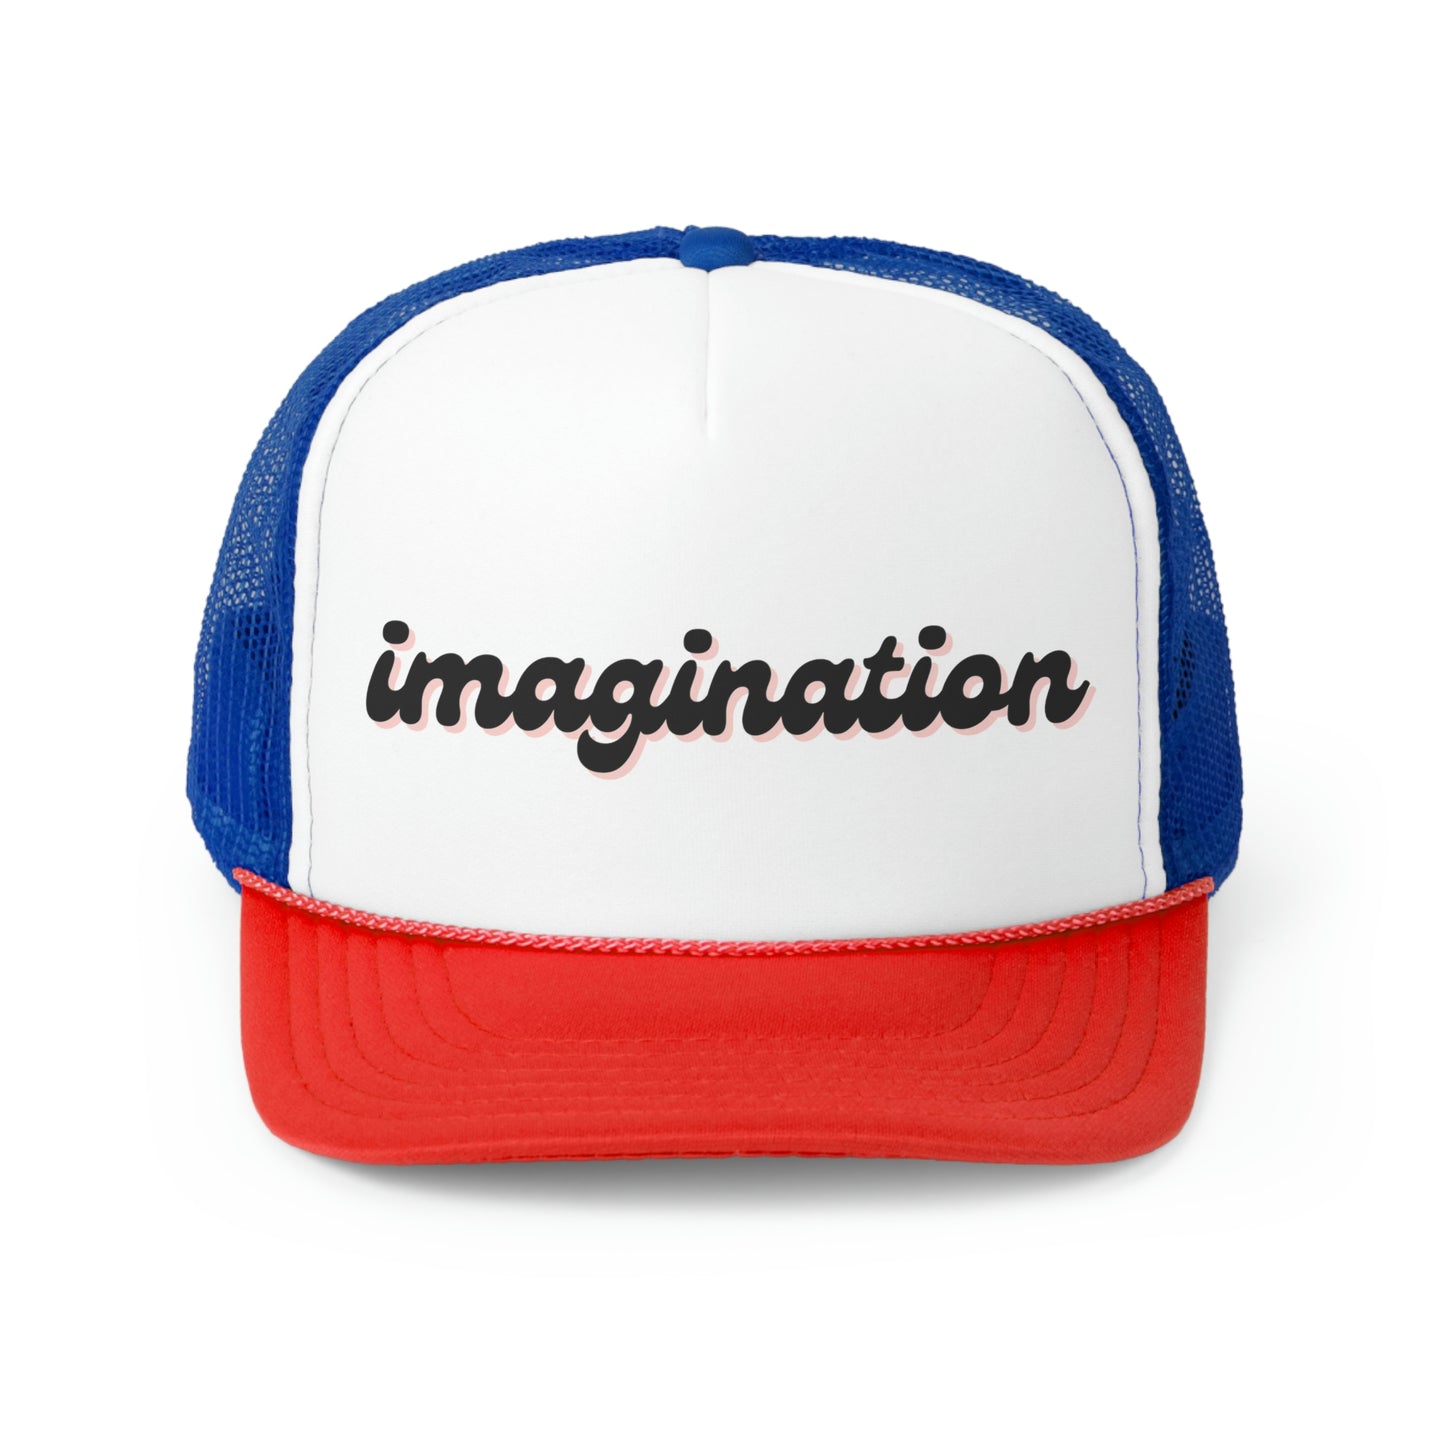 Freed's Creative Imagination Trucker Hat